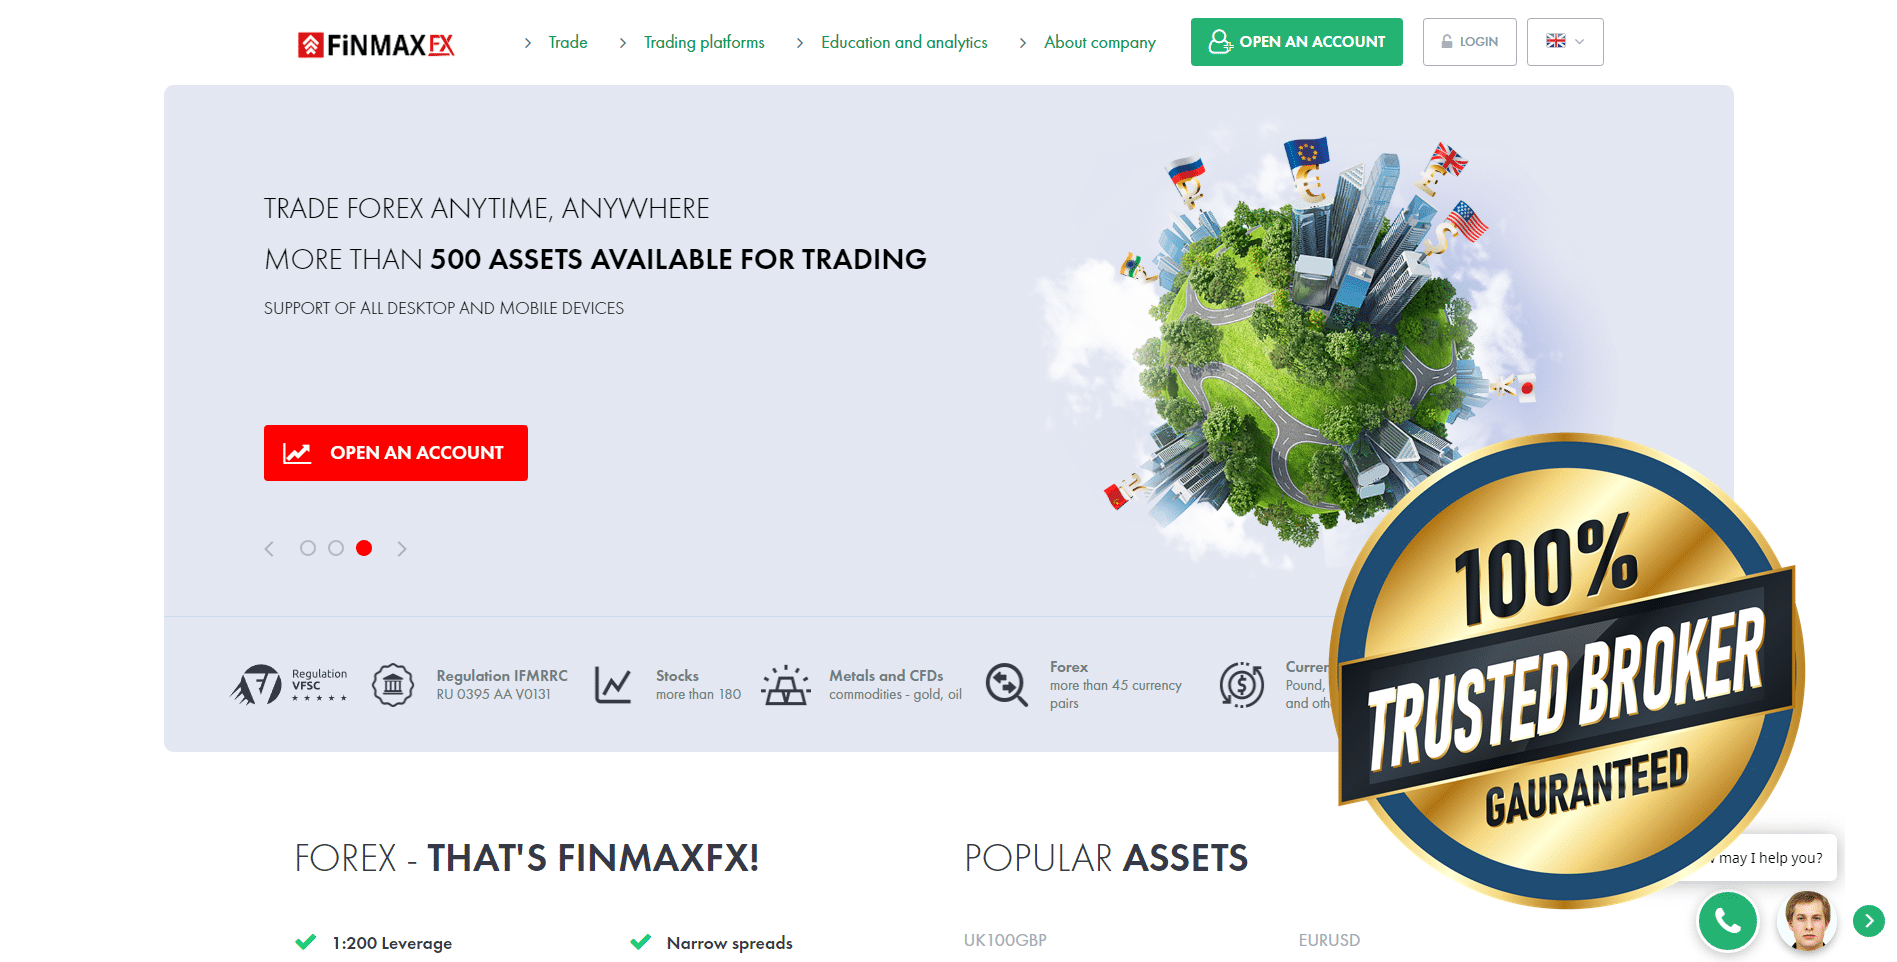 sito web finmaxfx (finmaxfx).